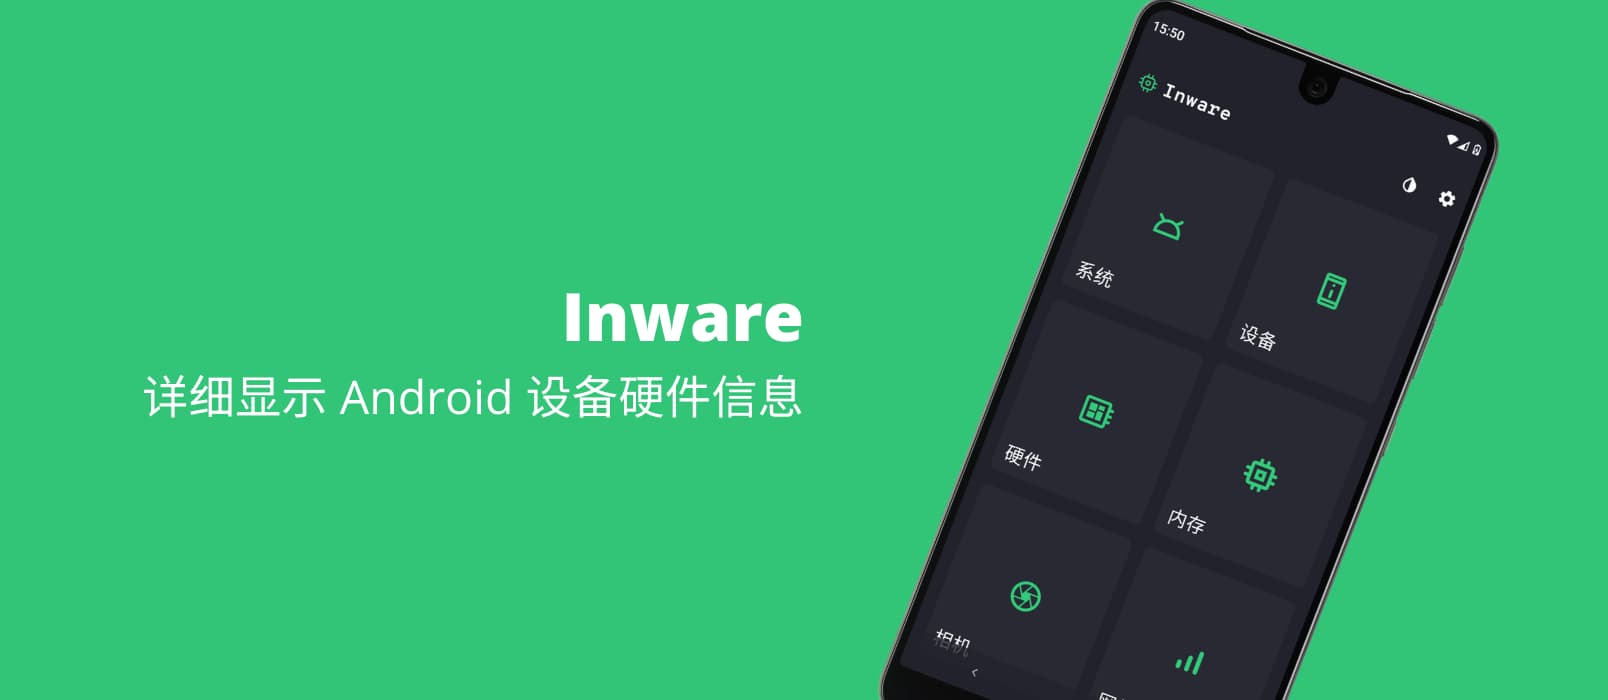 Inware - 详细显示 Android 设备硬件信息 1